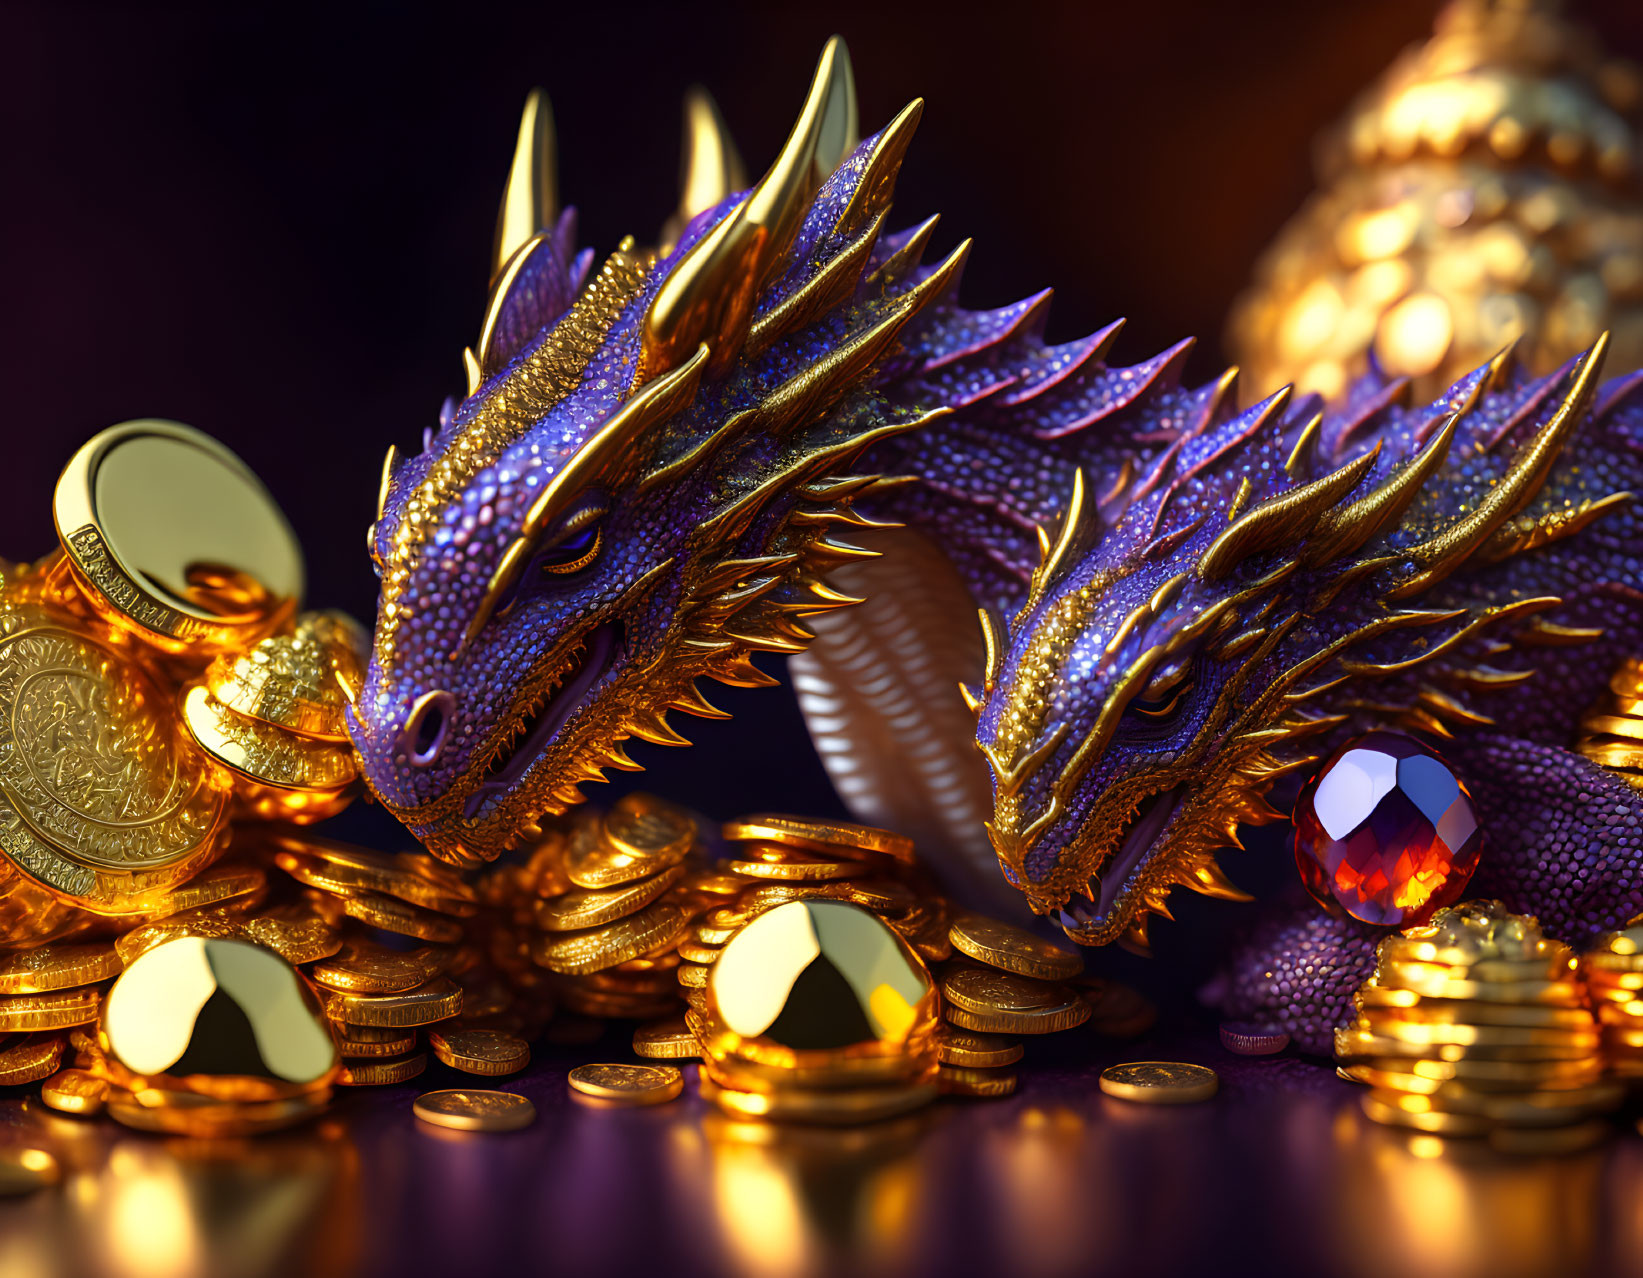 Baby dragons protecting their treasure